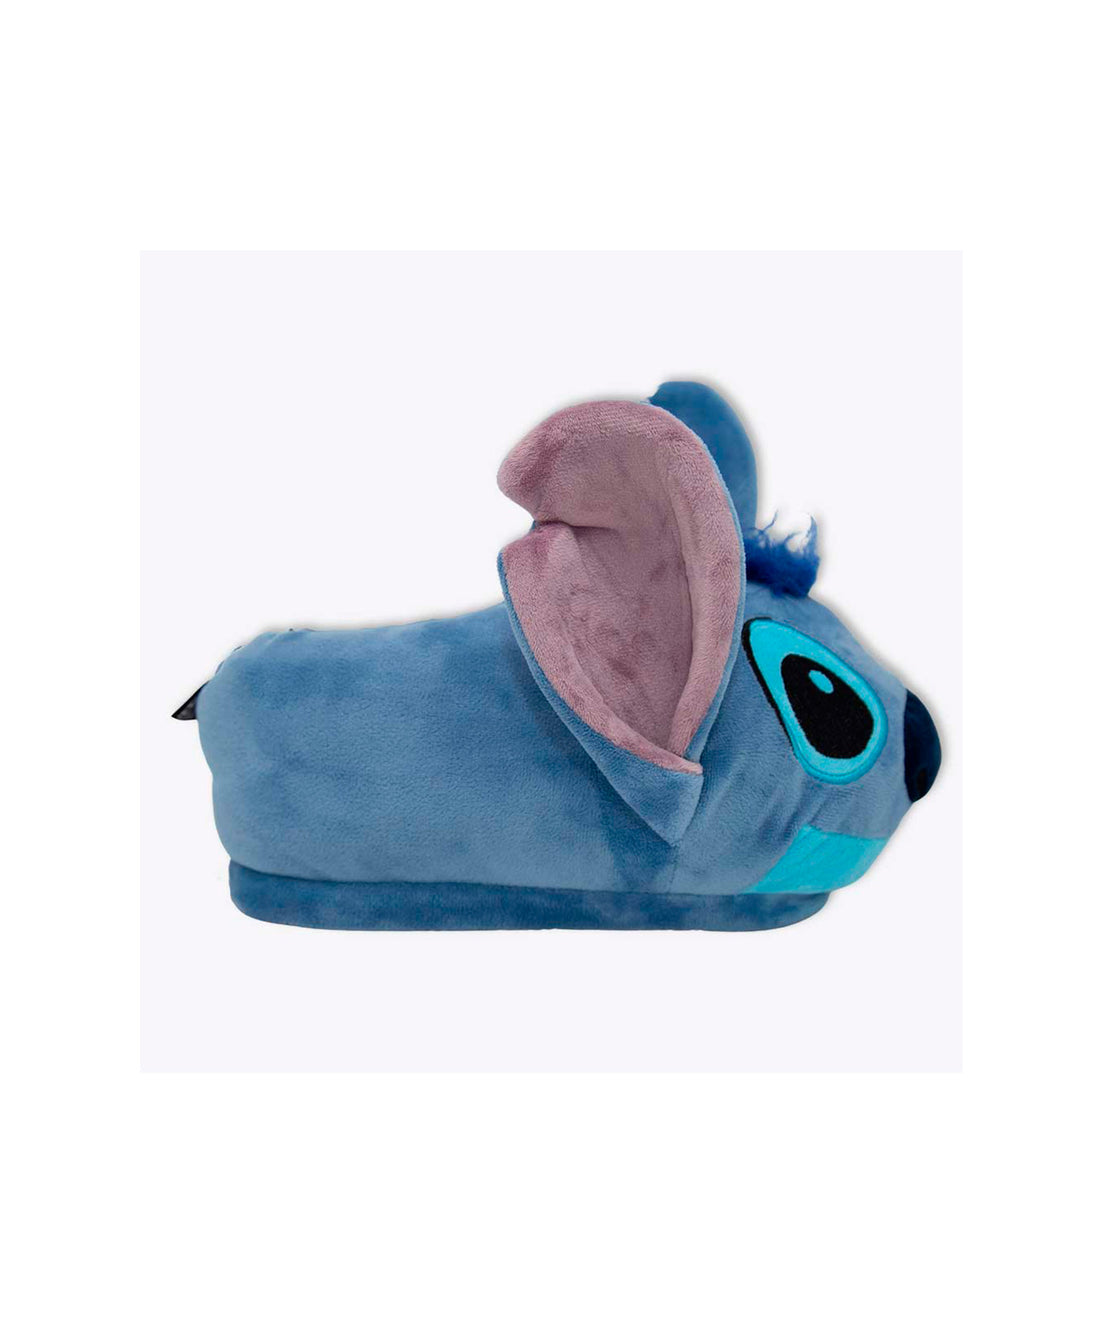 Pantufa Infantil Stitch - Disney